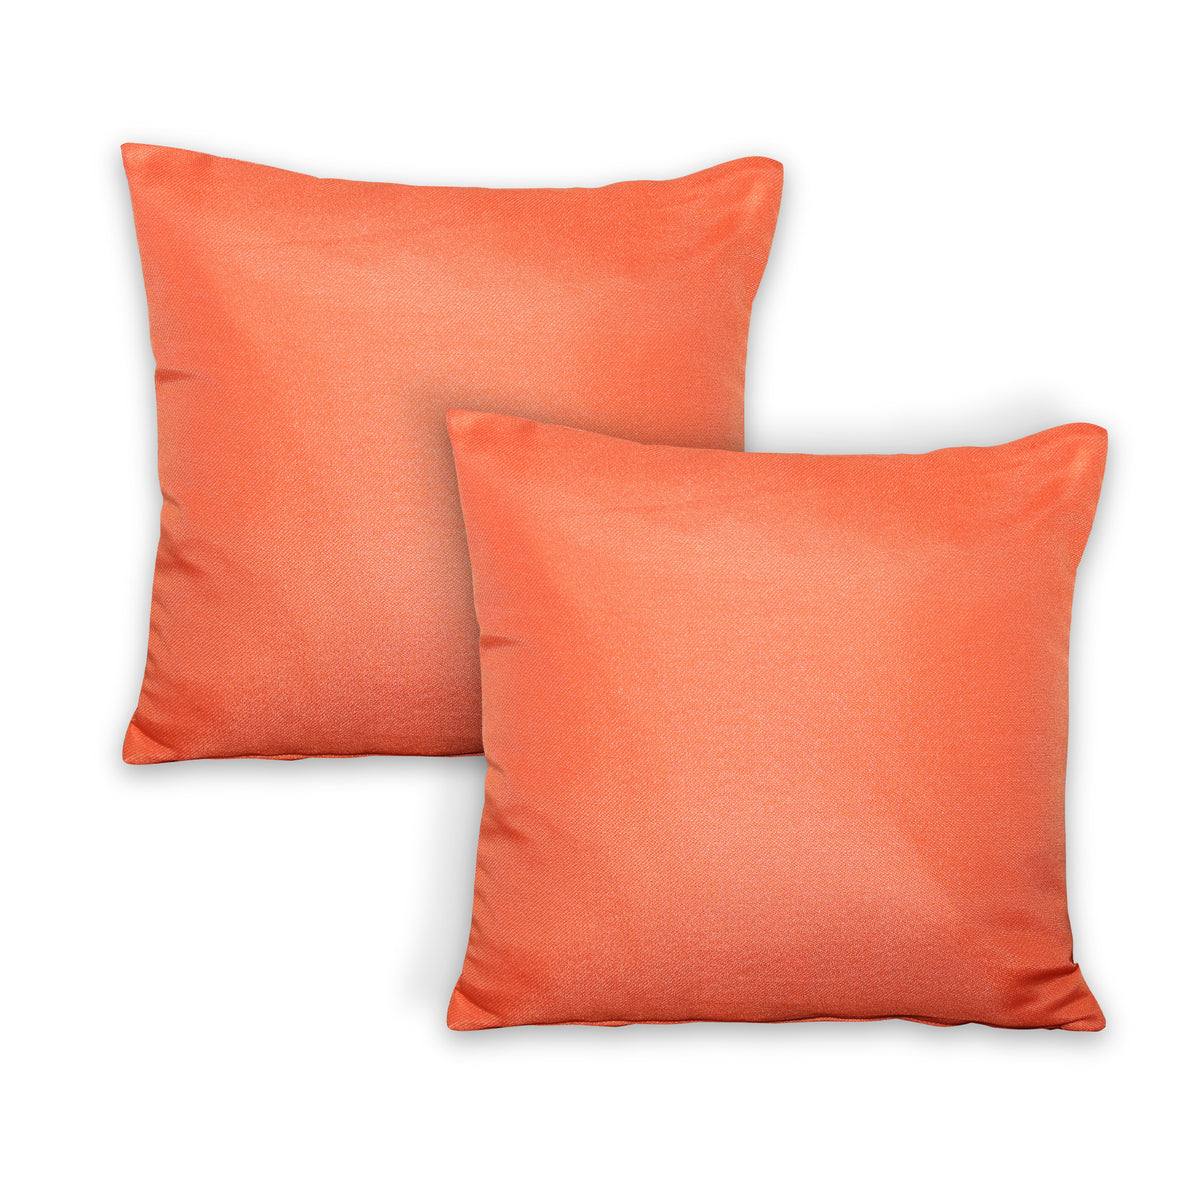 Outdoor Orange Plain Scatter Cushion